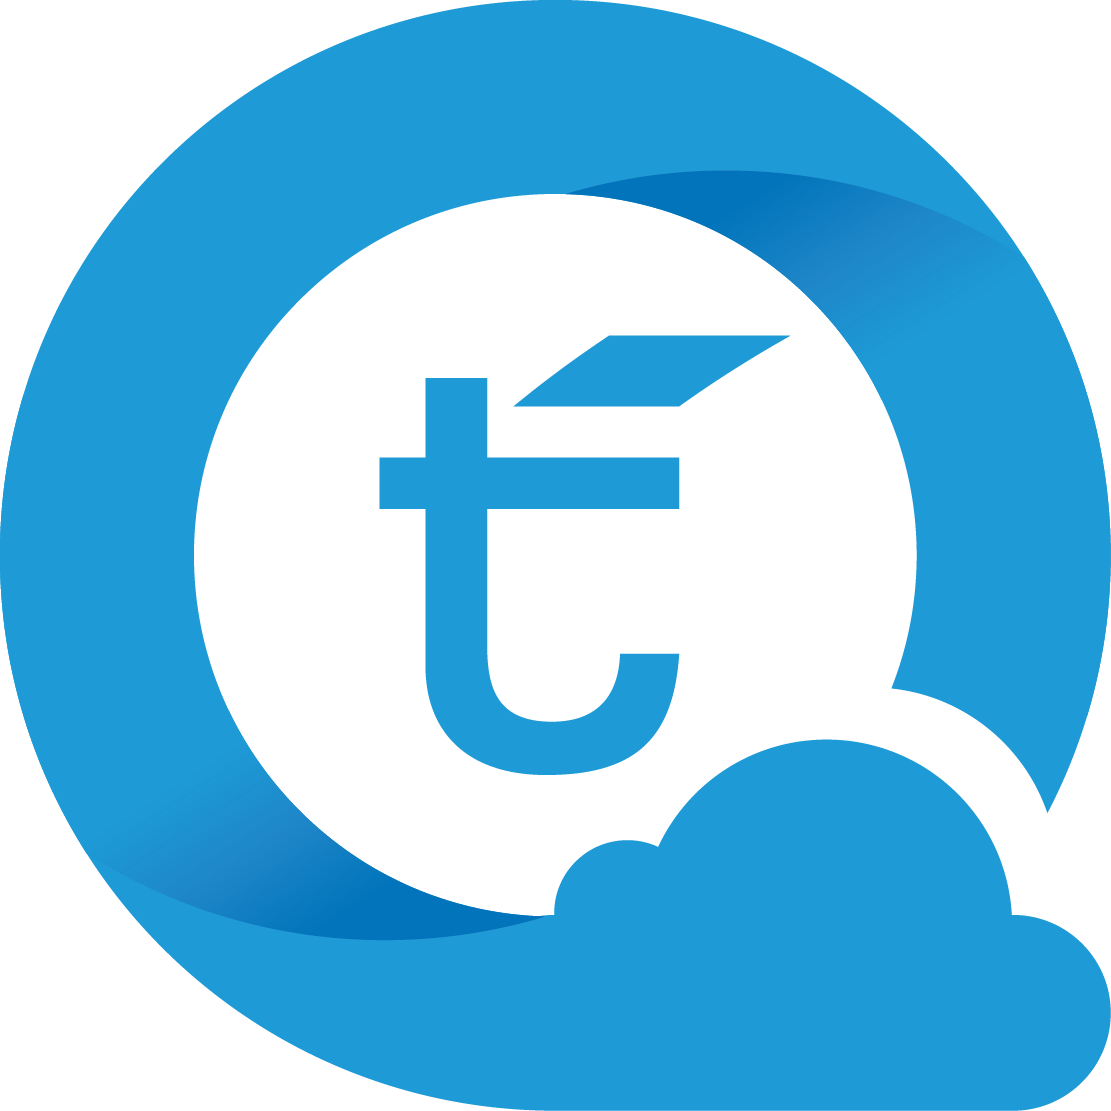 Telestream Logo - Telestream Press Kit